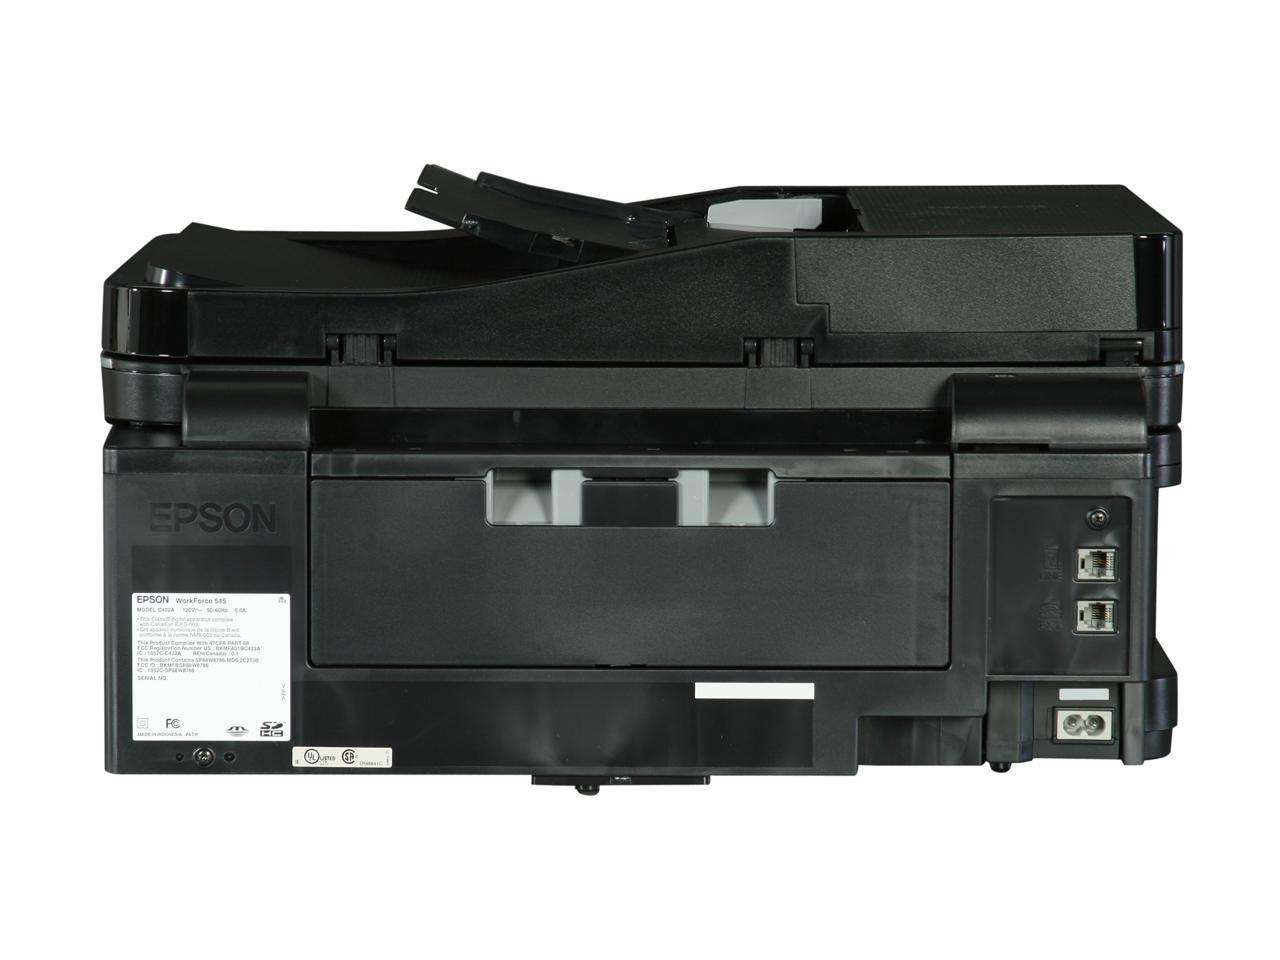 Epson Workforce 545 C11cb88201 Wireless Micropiezo Inkjet Mfc All In One Color Printer Neweggca 4580